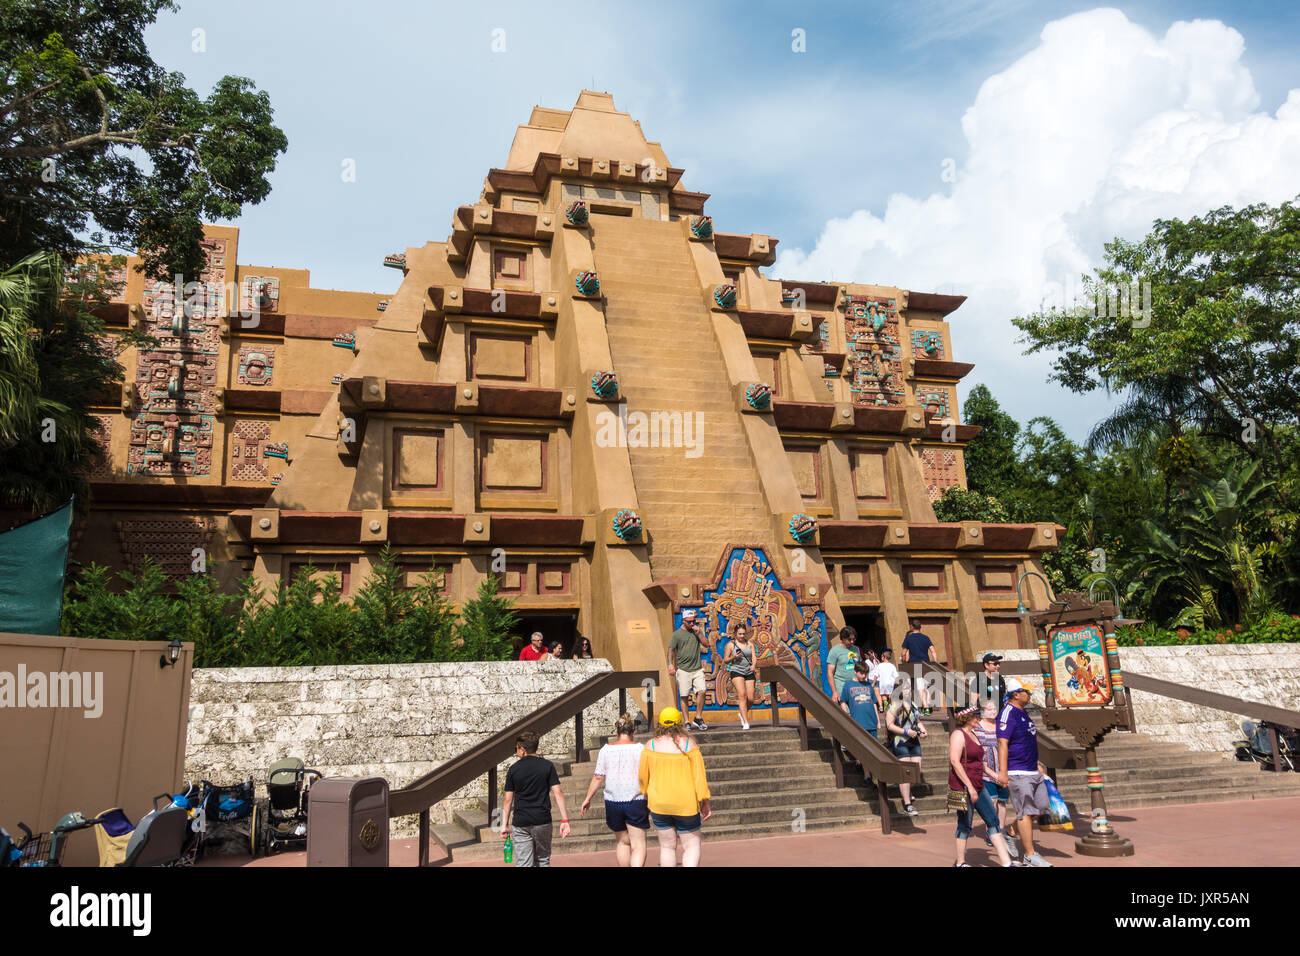 The Mexico Pavilion in Epcot, Walt Disney World, Orlando, Florida. Stock Photo